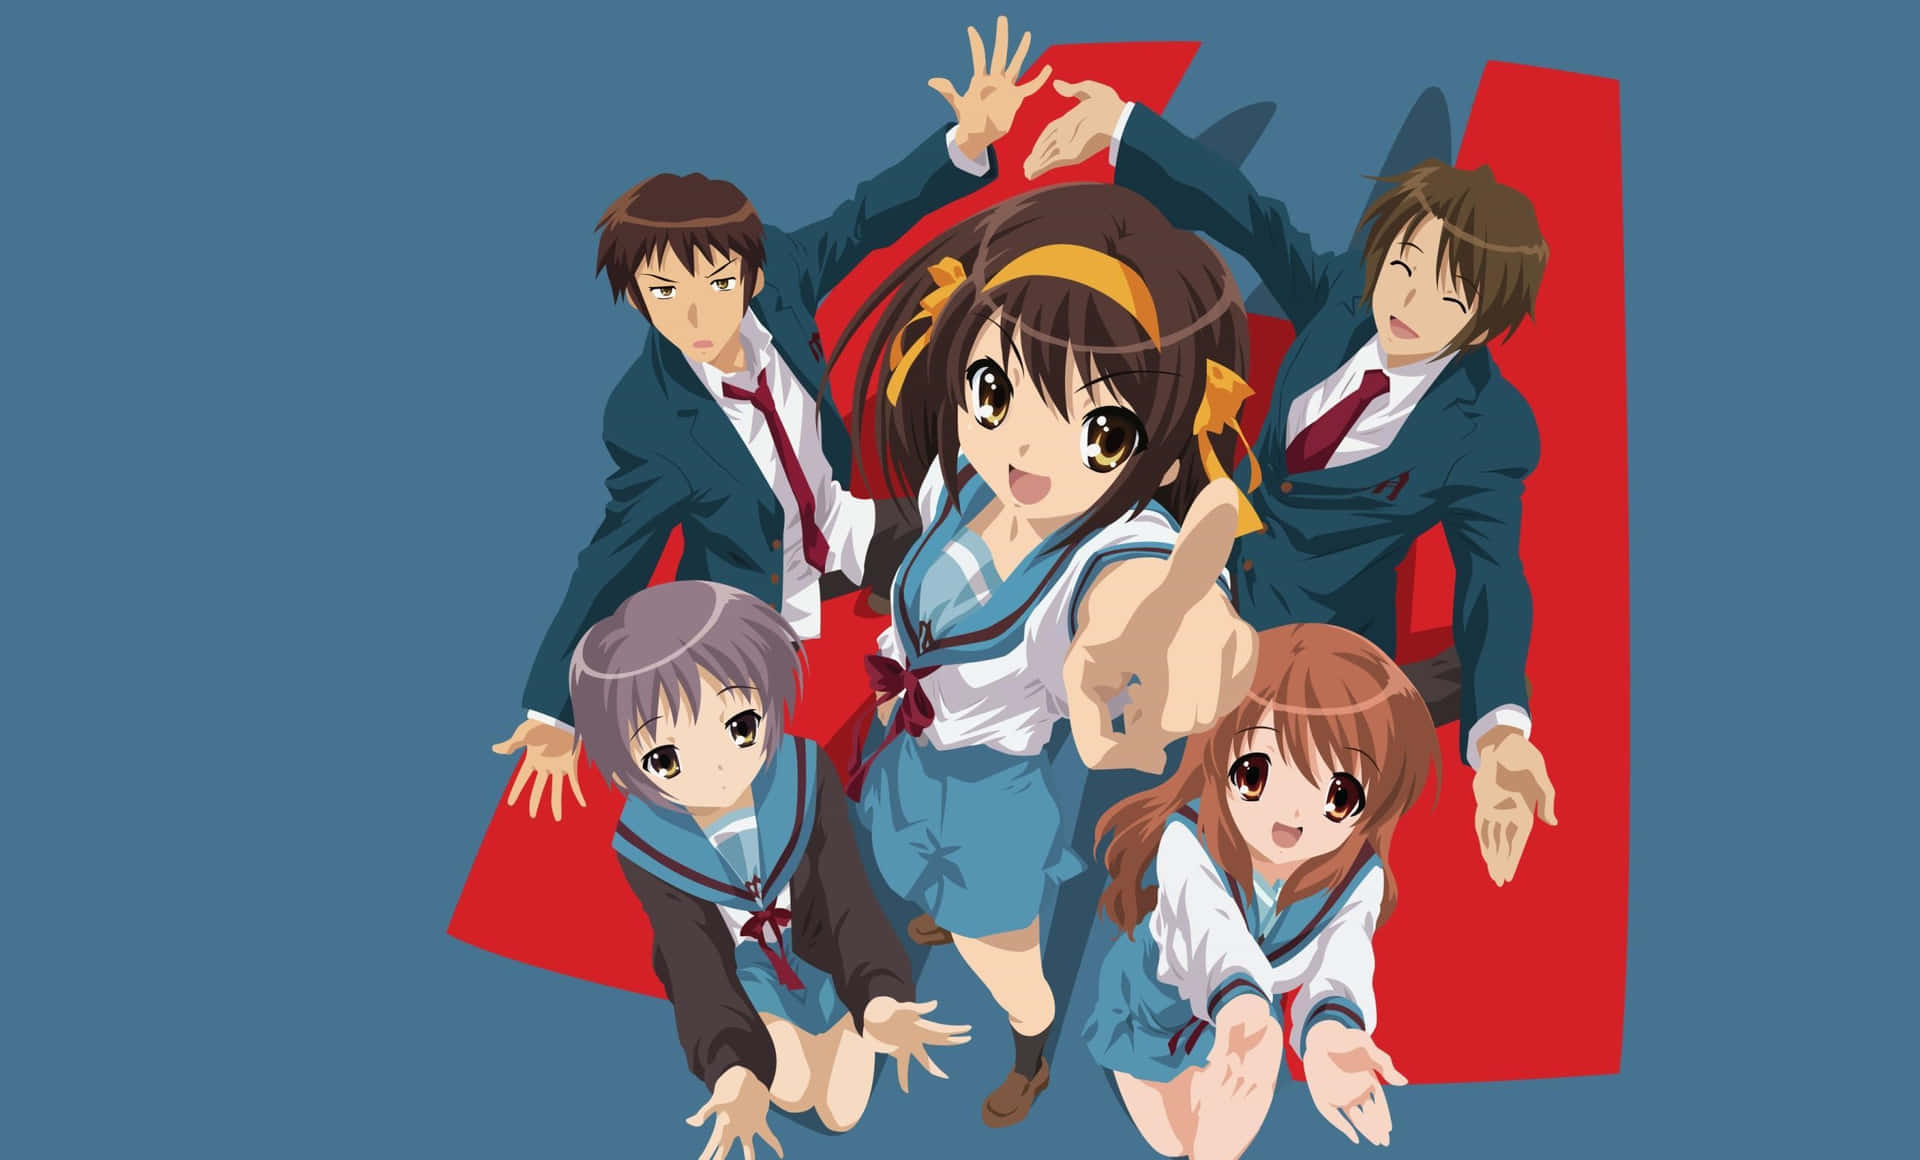 Haruhi Suzumiya and SOS Brigade members in a captivating anime wallpaper Wallpaper